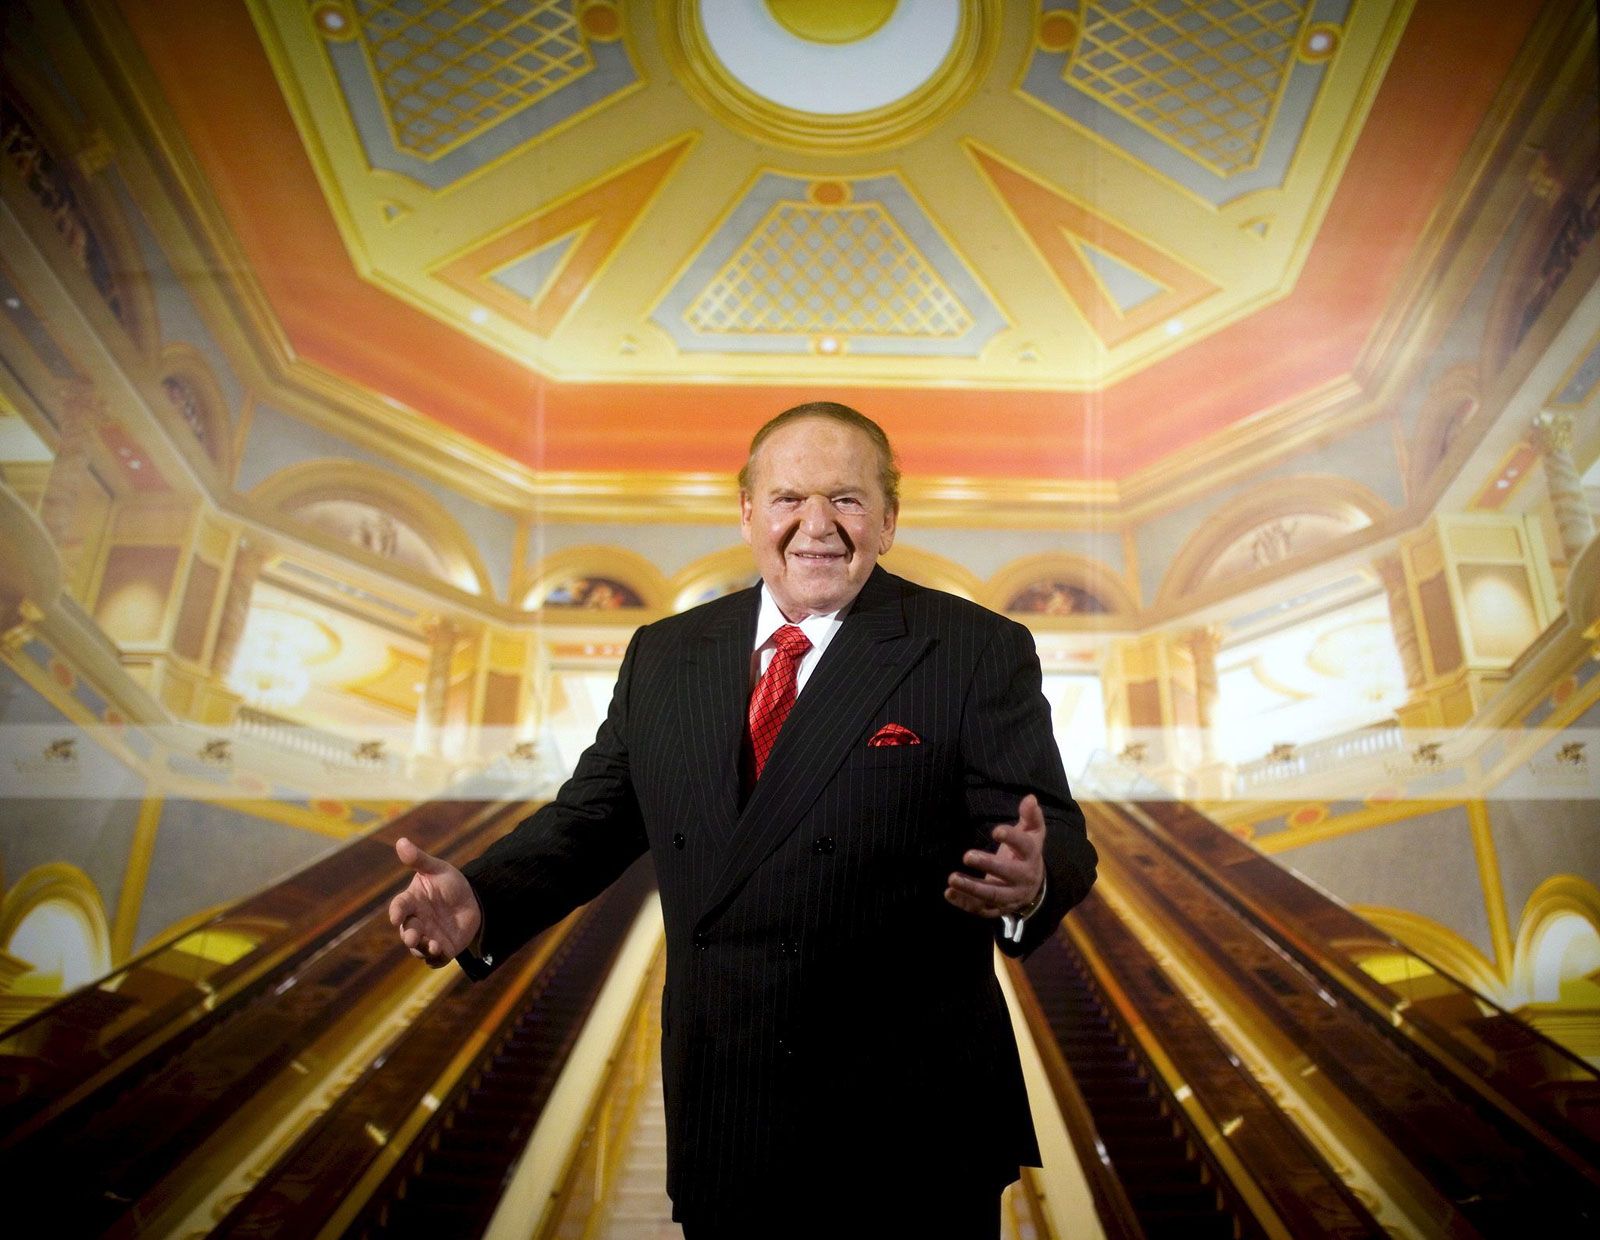 Sheldon Adelson | Biography, Casinos, Politics, & Facts | Britannica